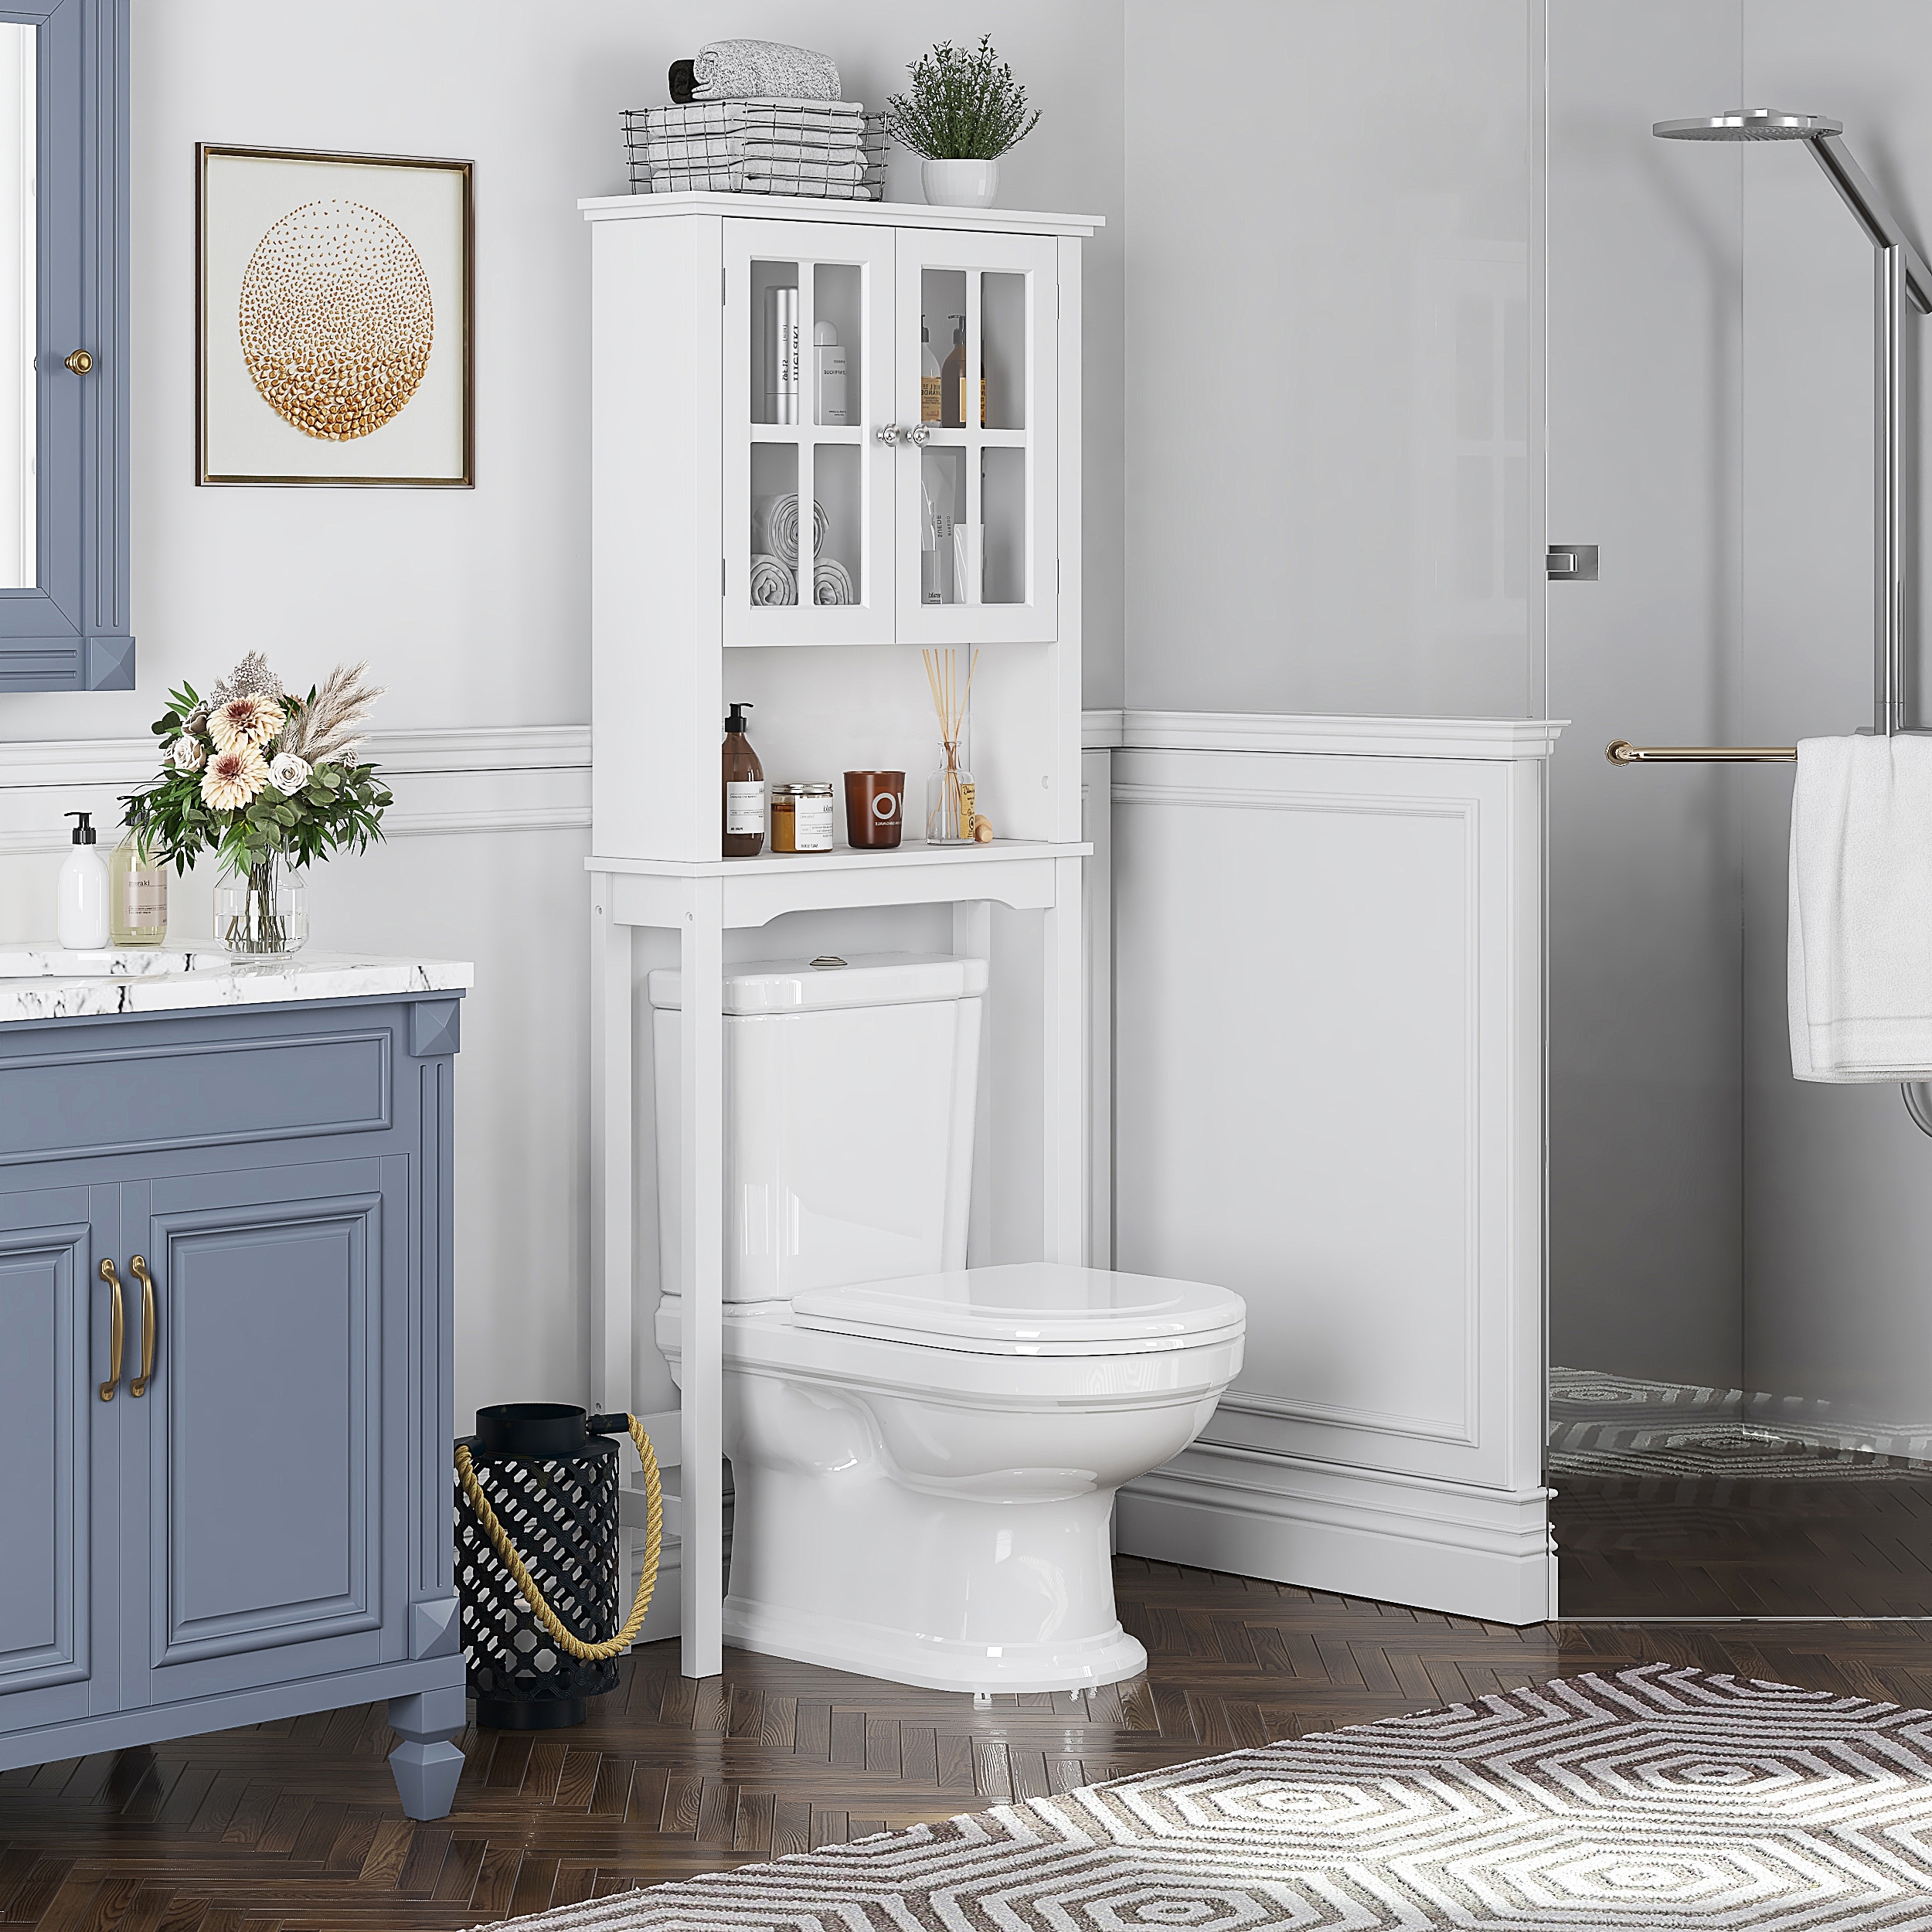 https://ak1.ostkcdn.com/images/products/is/images/direct/b4e35088e693029db3f5141d8f48d84798ef5dc2/Spirich-Home-Over-The-Toilet-Storage-Cabinet%2C-Bathroom-Shelf-Over-Toilet%2C-Bathroom-Space-Saver-Cabinet-with-Glass-Doors%2C-White.jpg